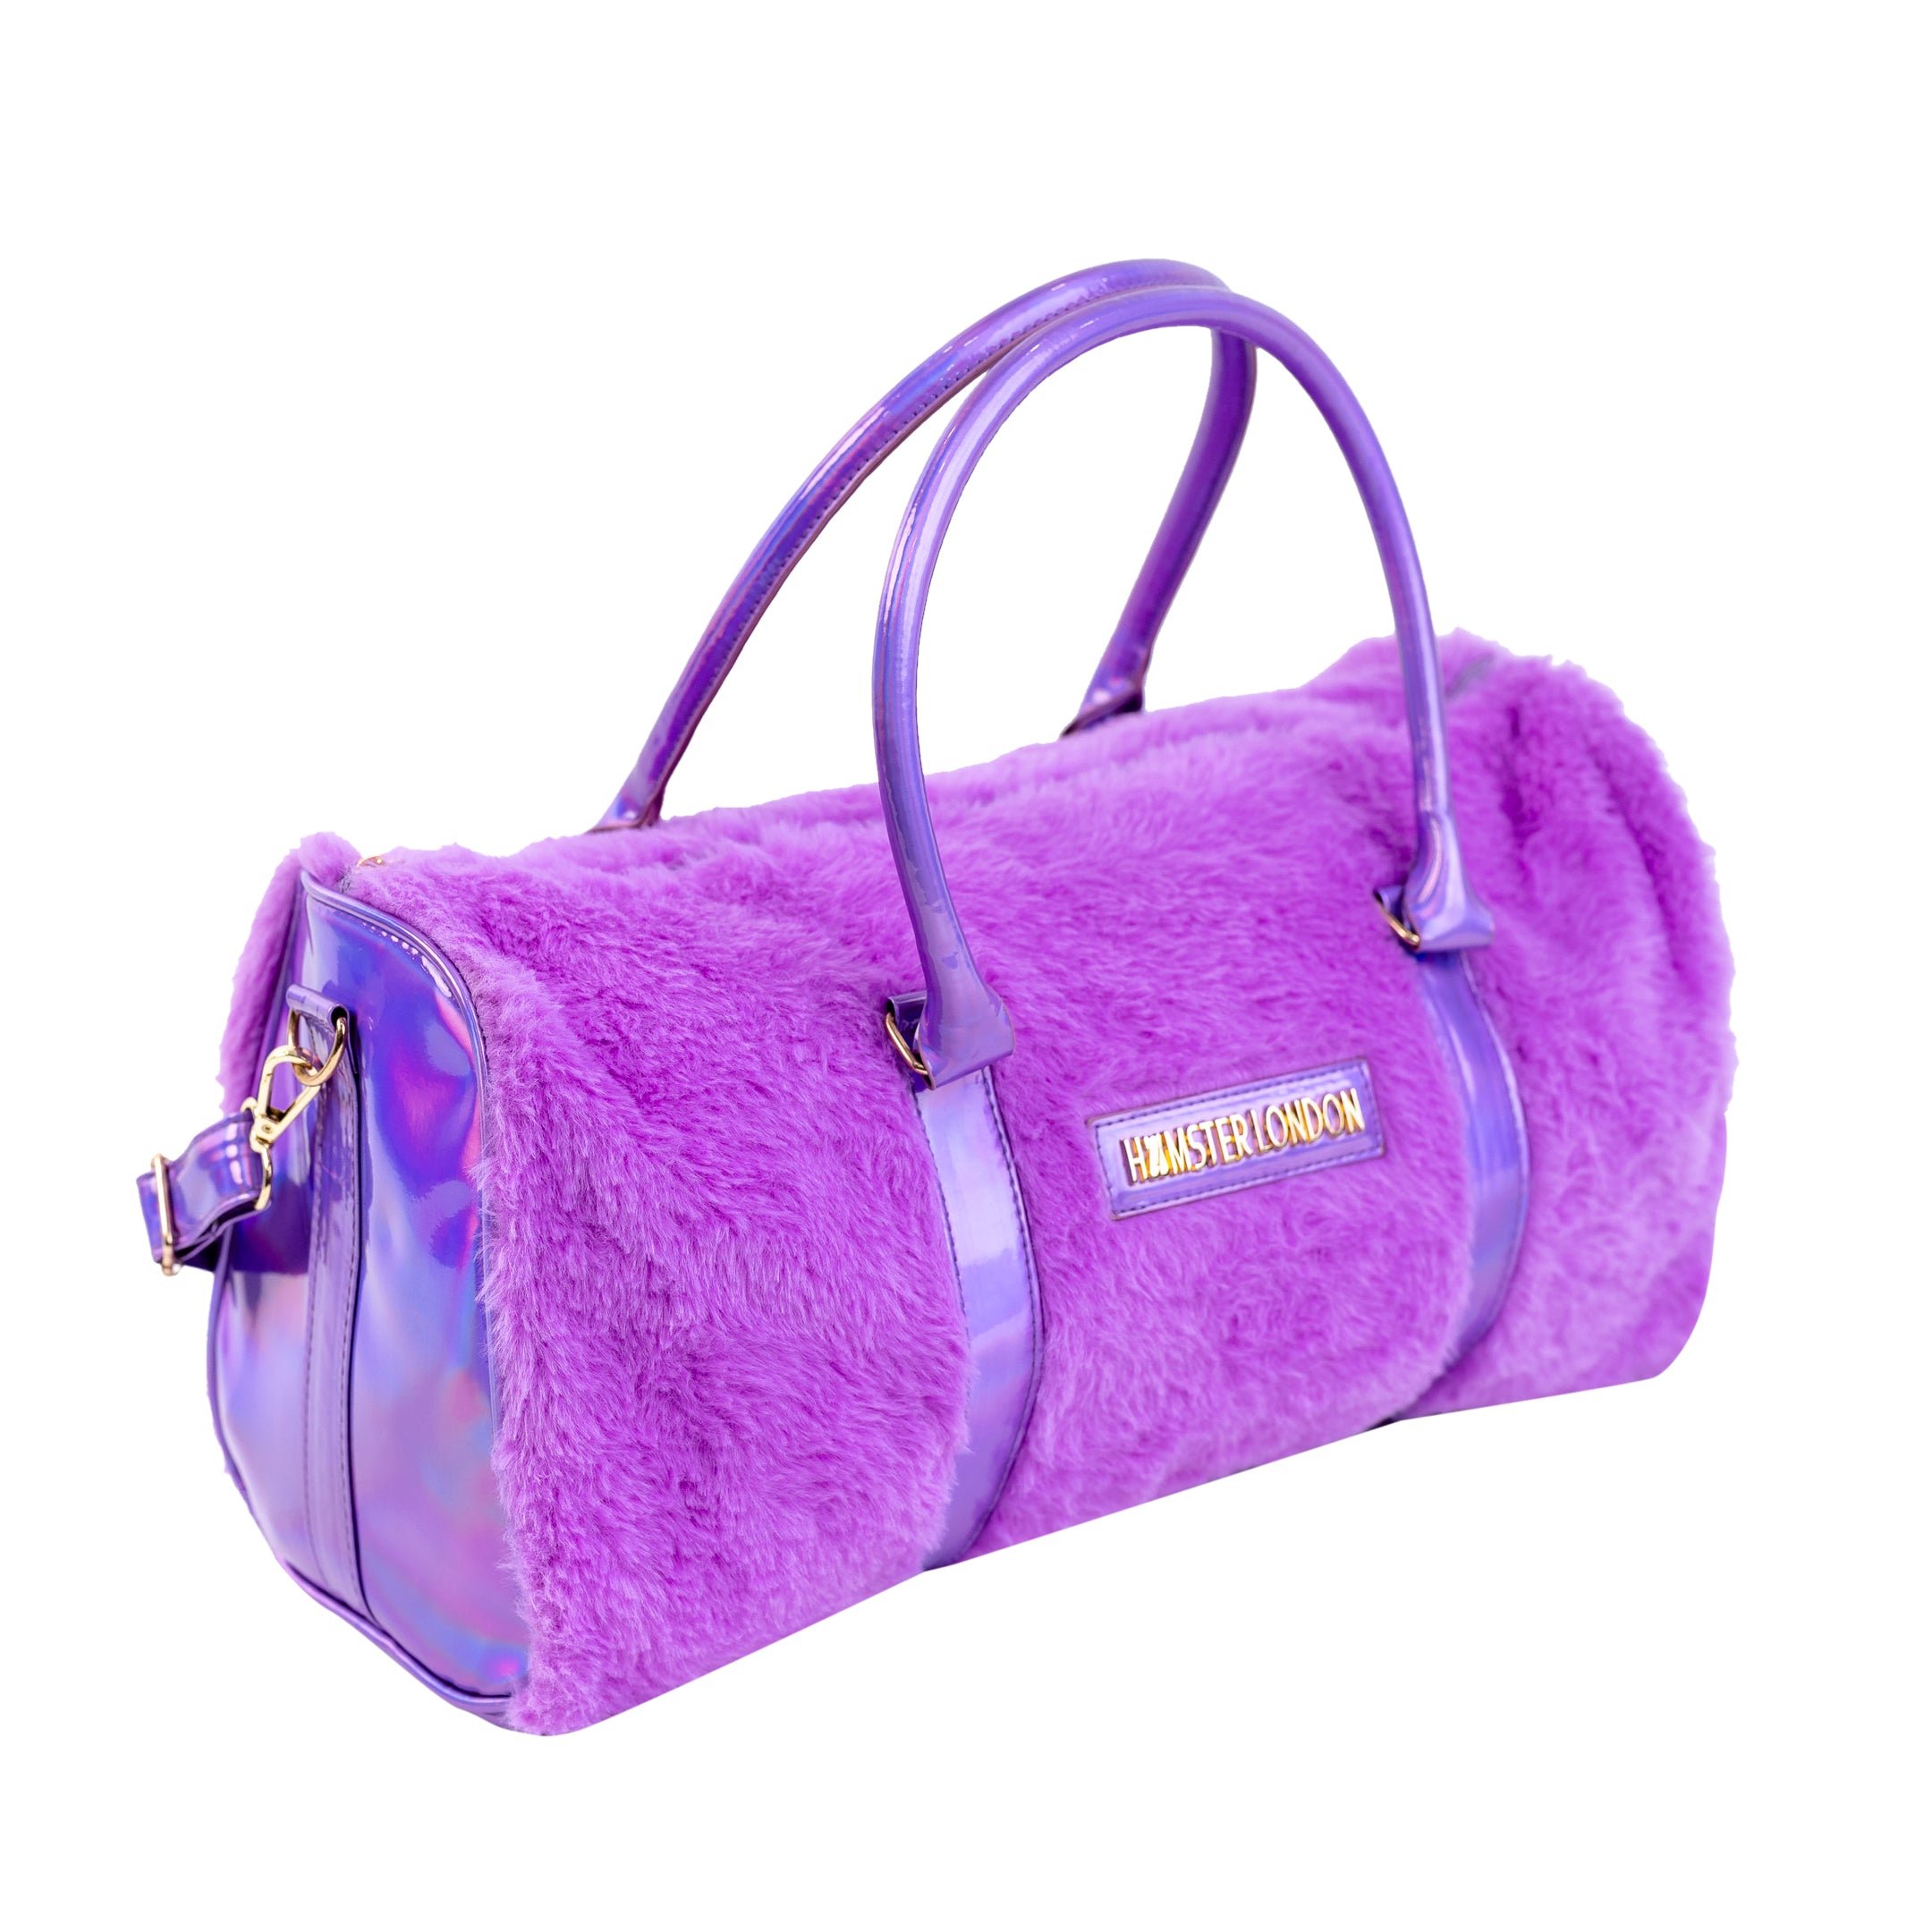 Hamster Fur Baby Duffle Bag Purple